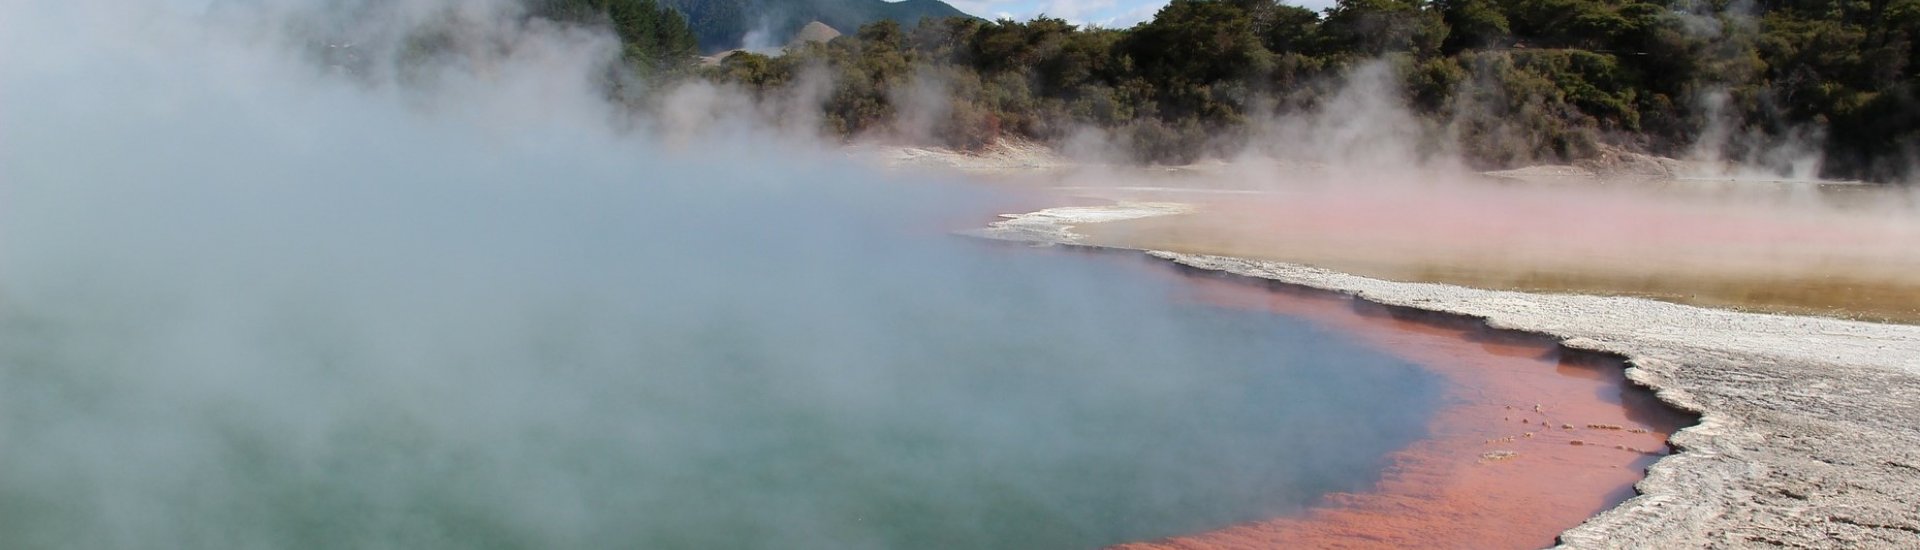 Volcanic Pool